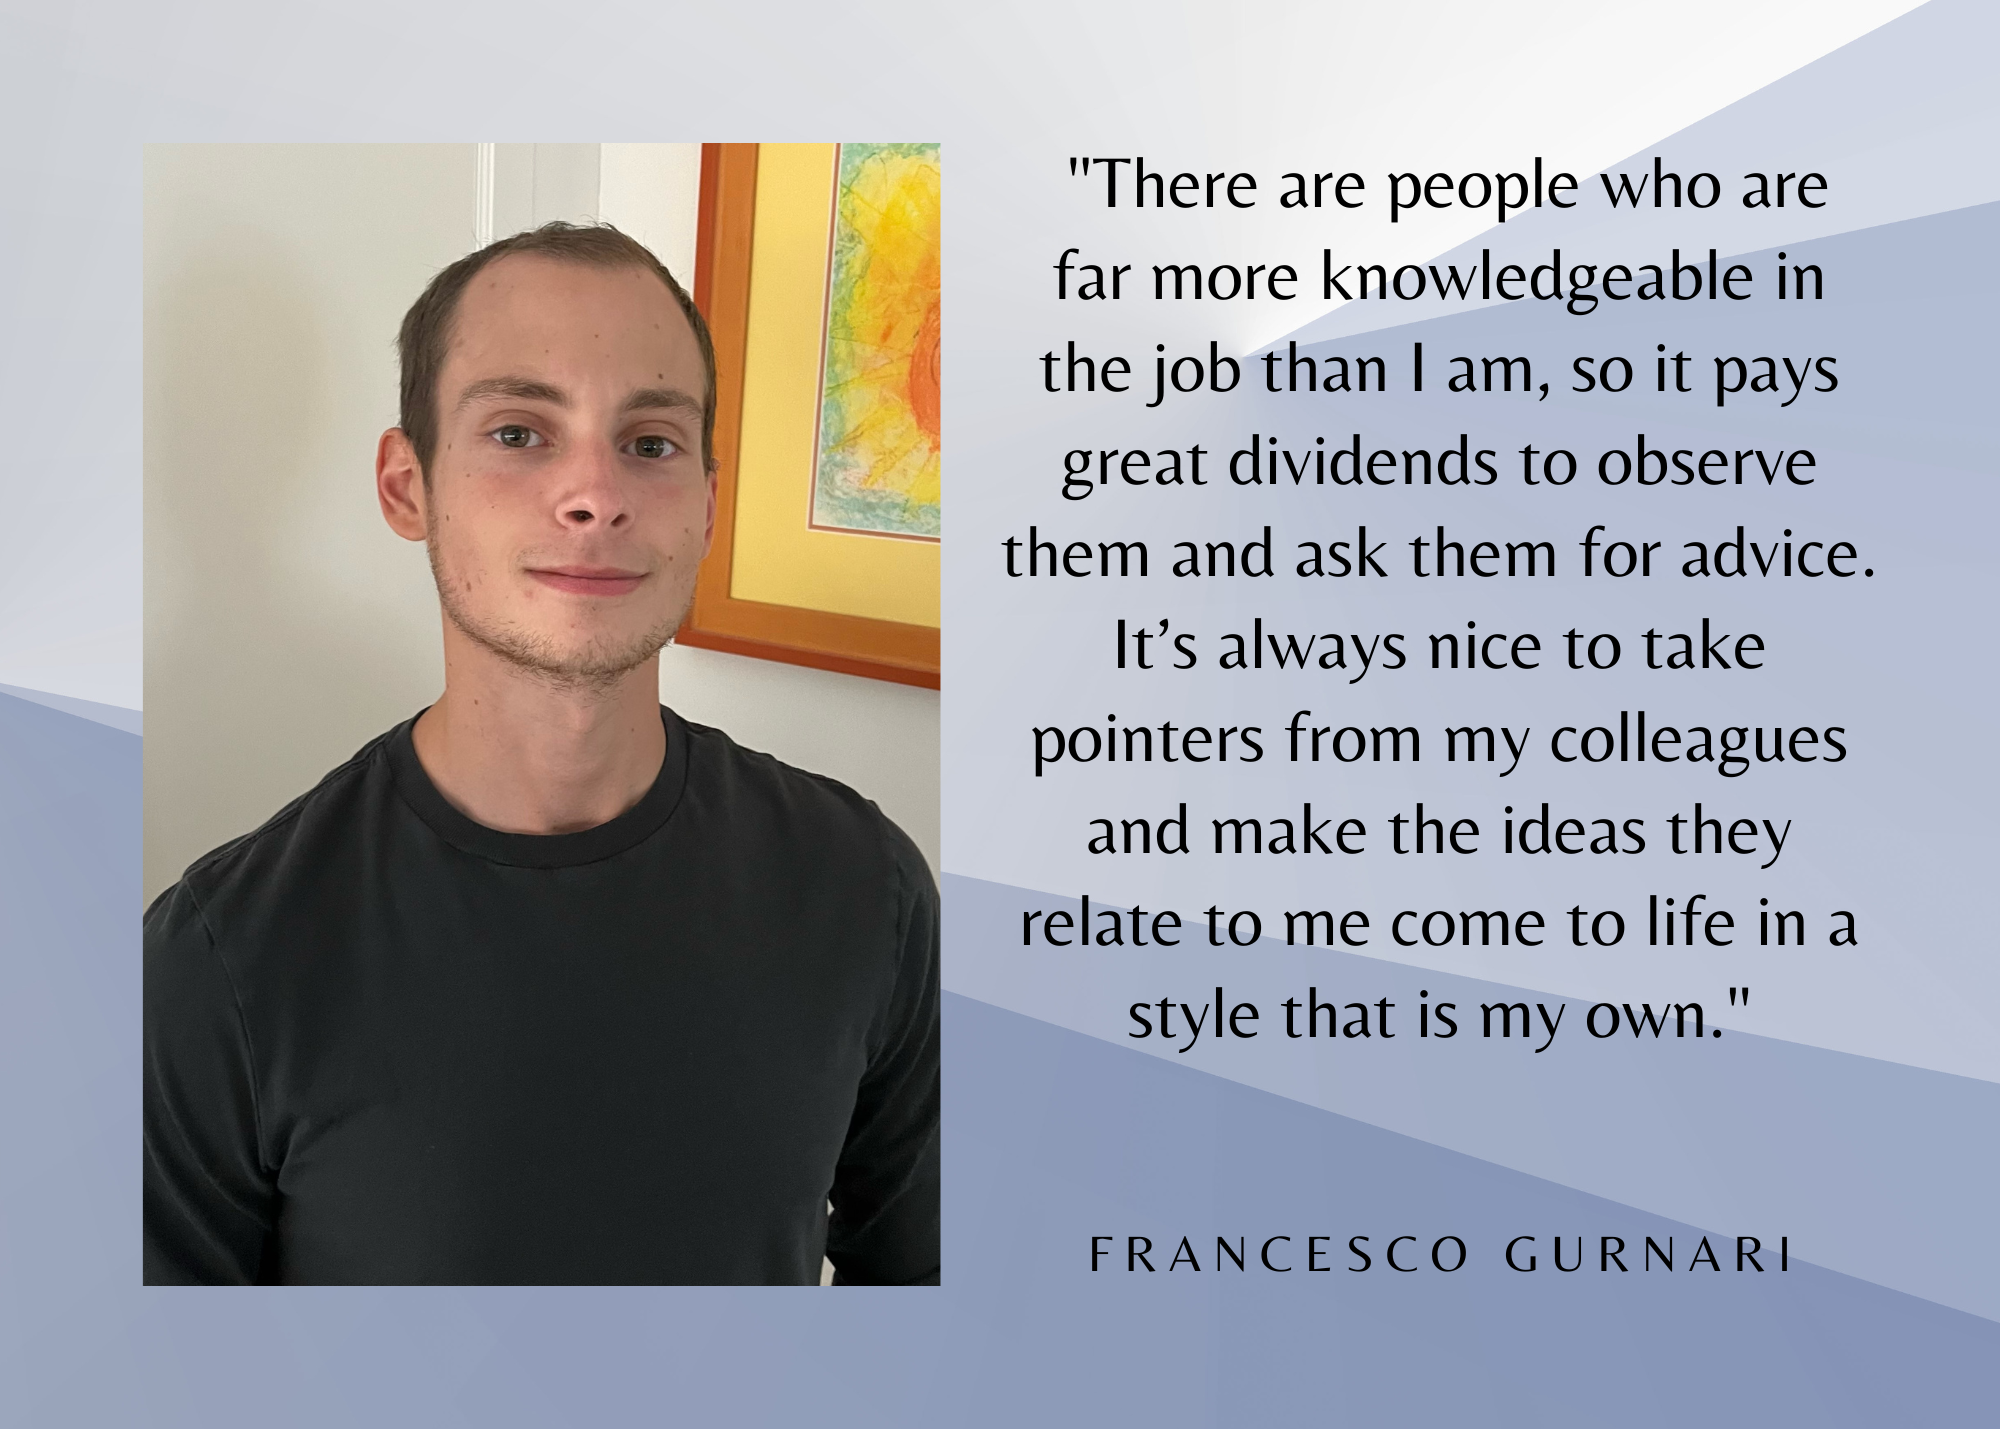 Francesco Gurnari launches a website to share his ideas